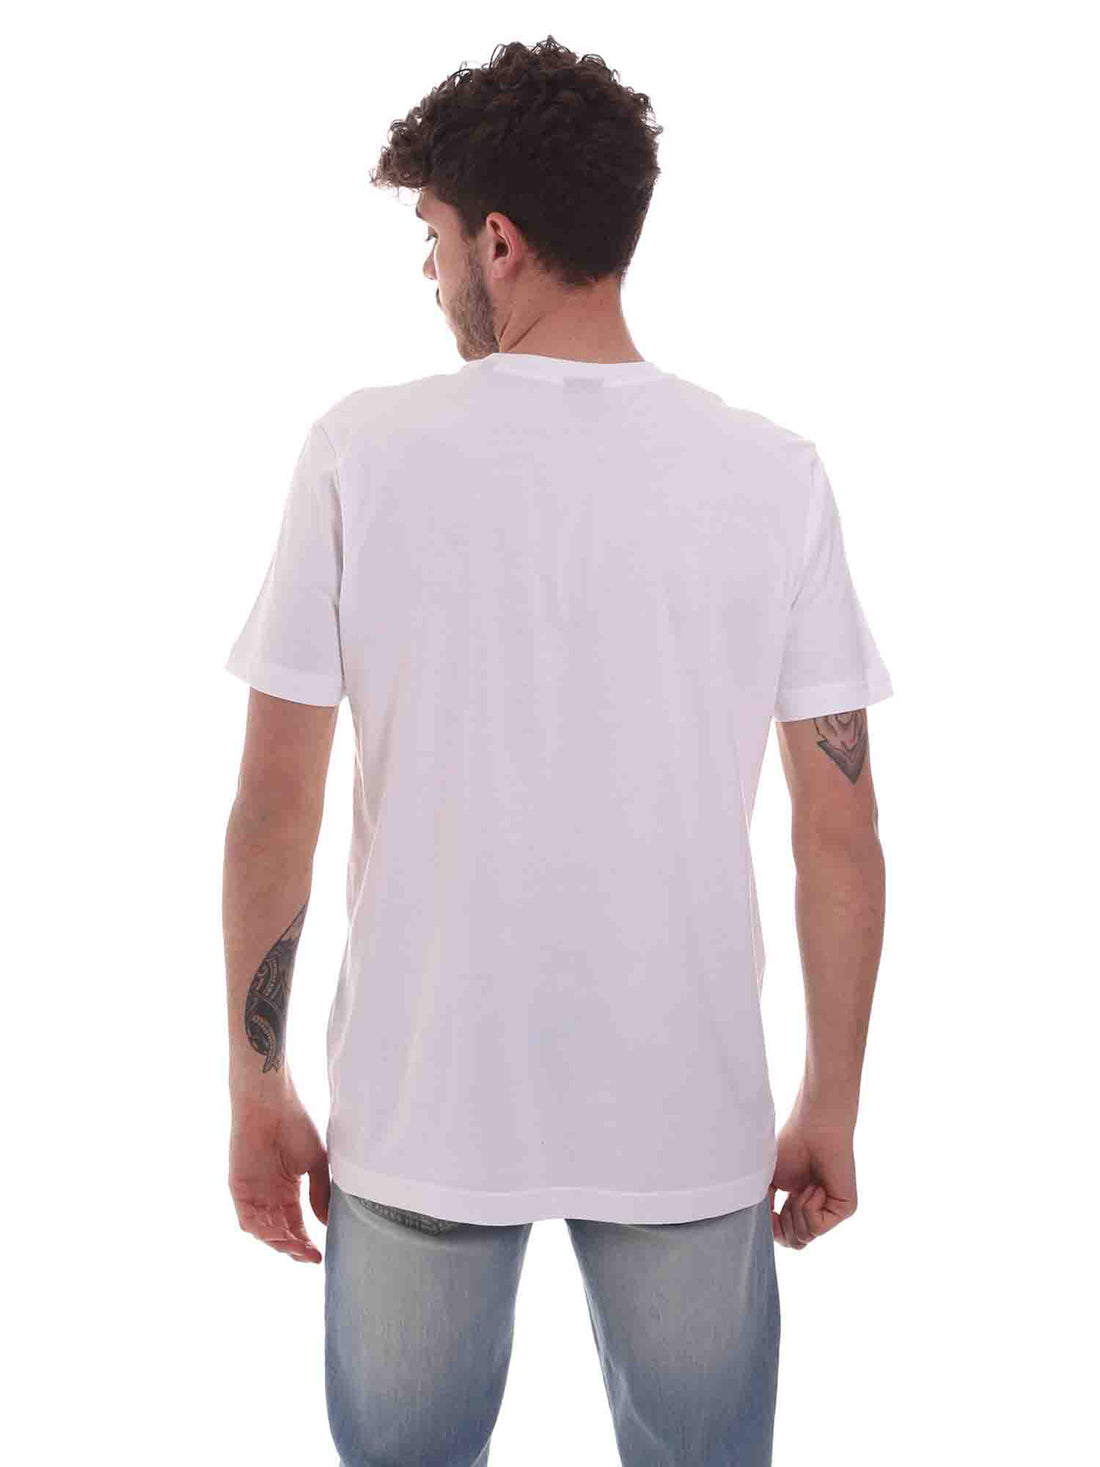 T-shirt Bianco Key Up